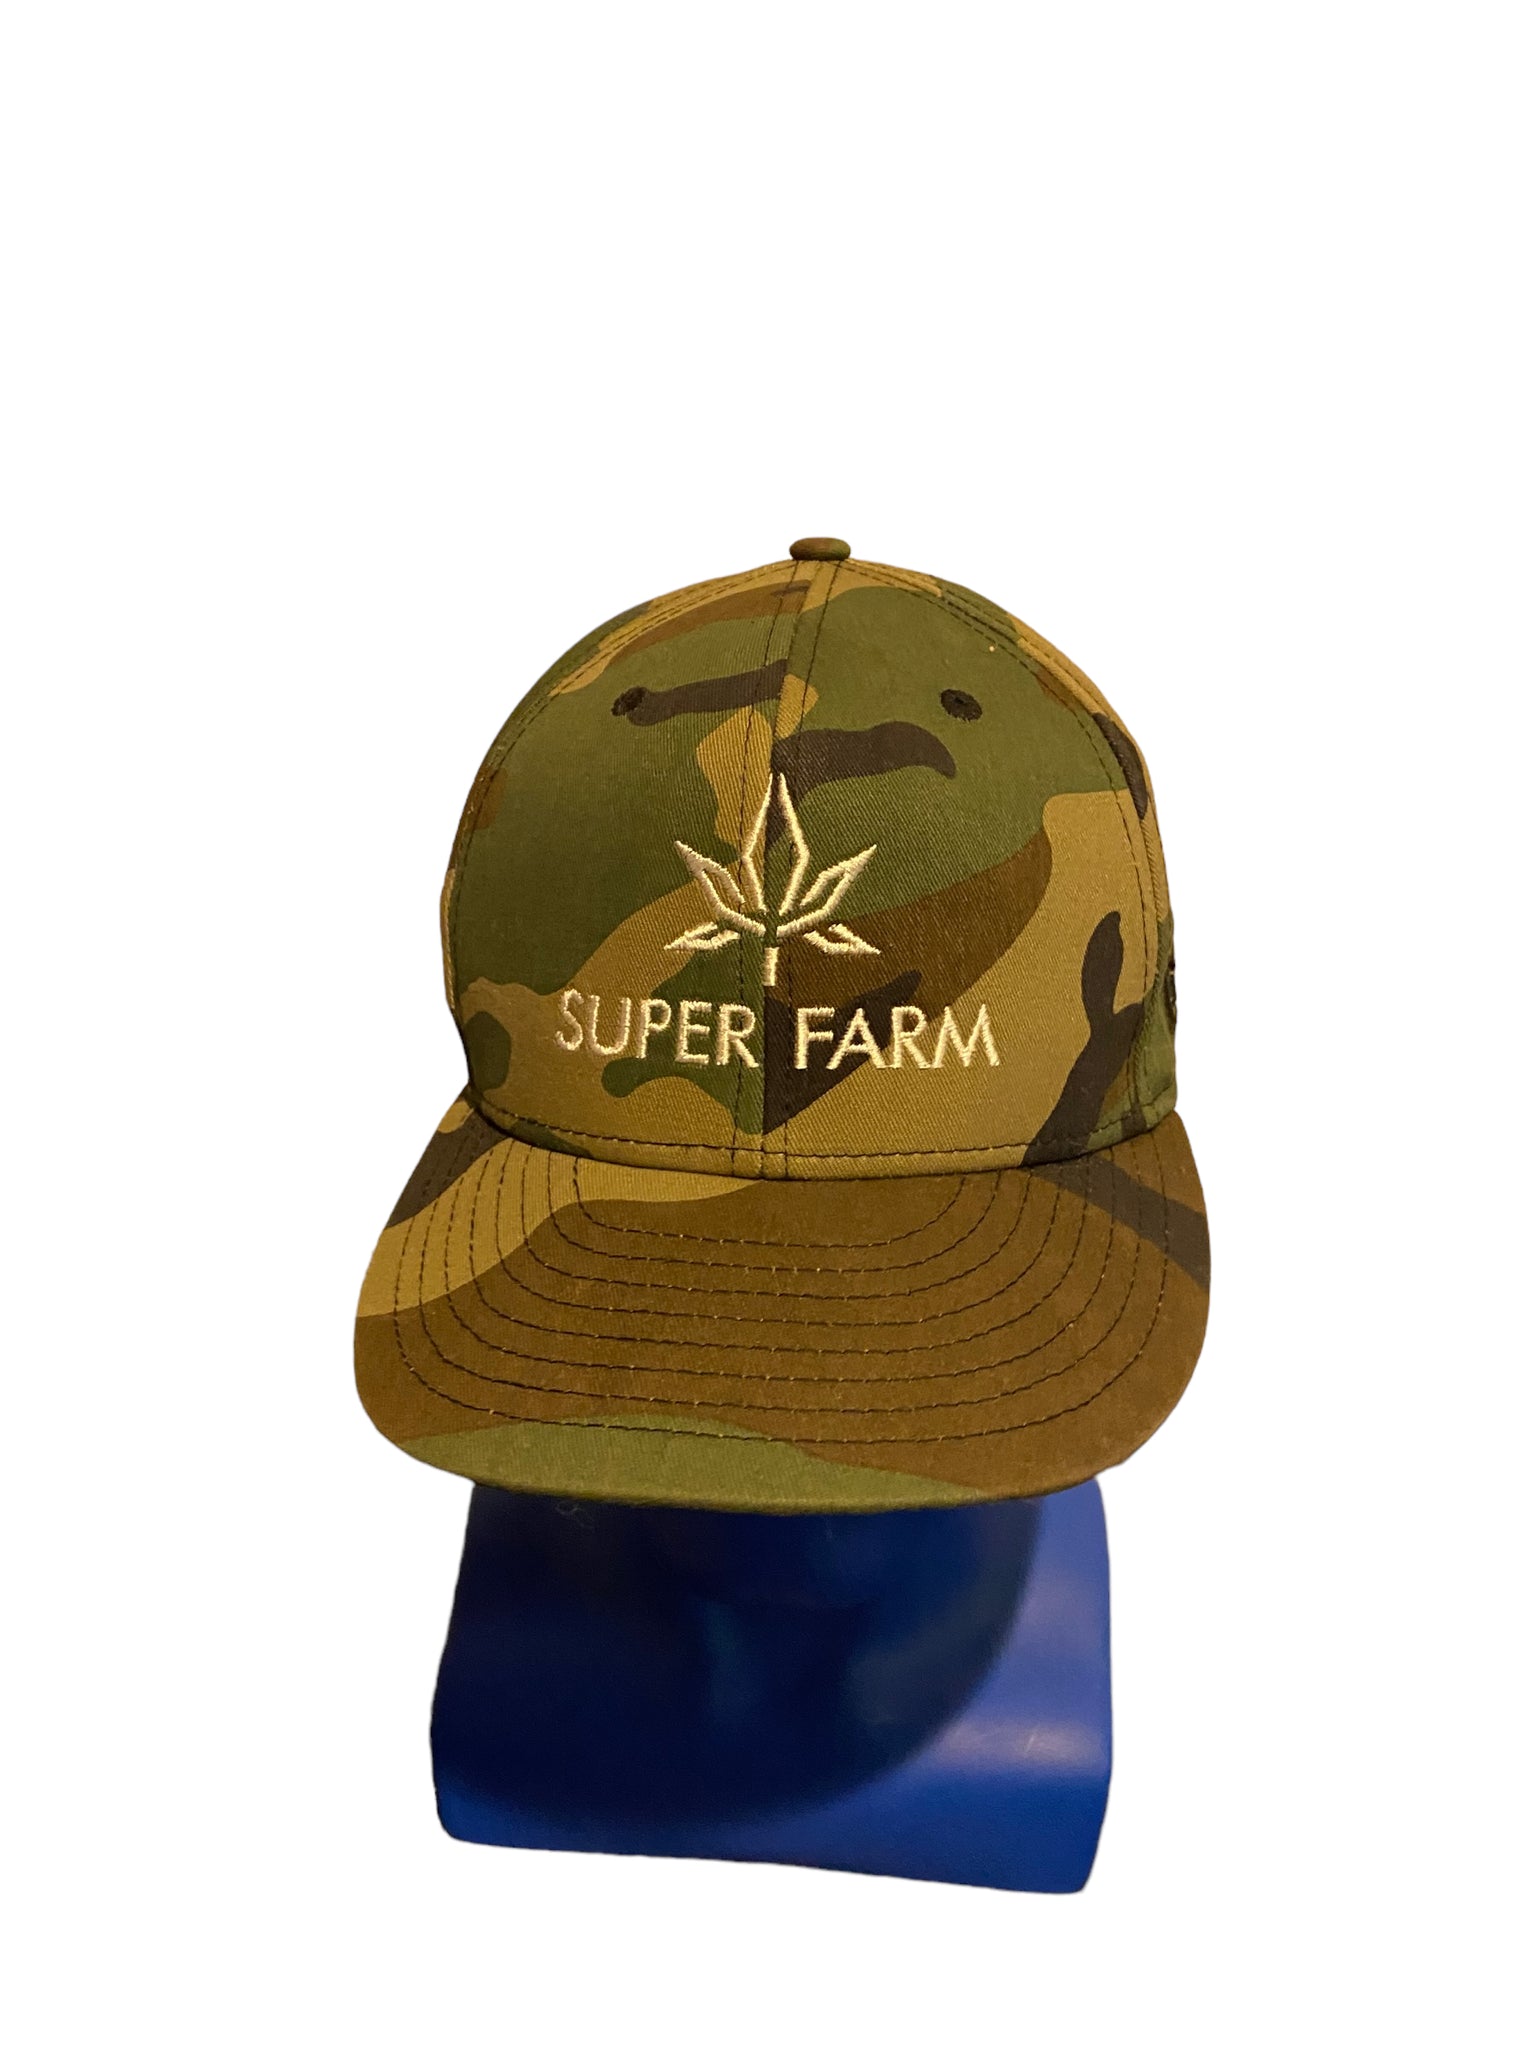 new era snapback super farm and leaf logo embroidered camo hat